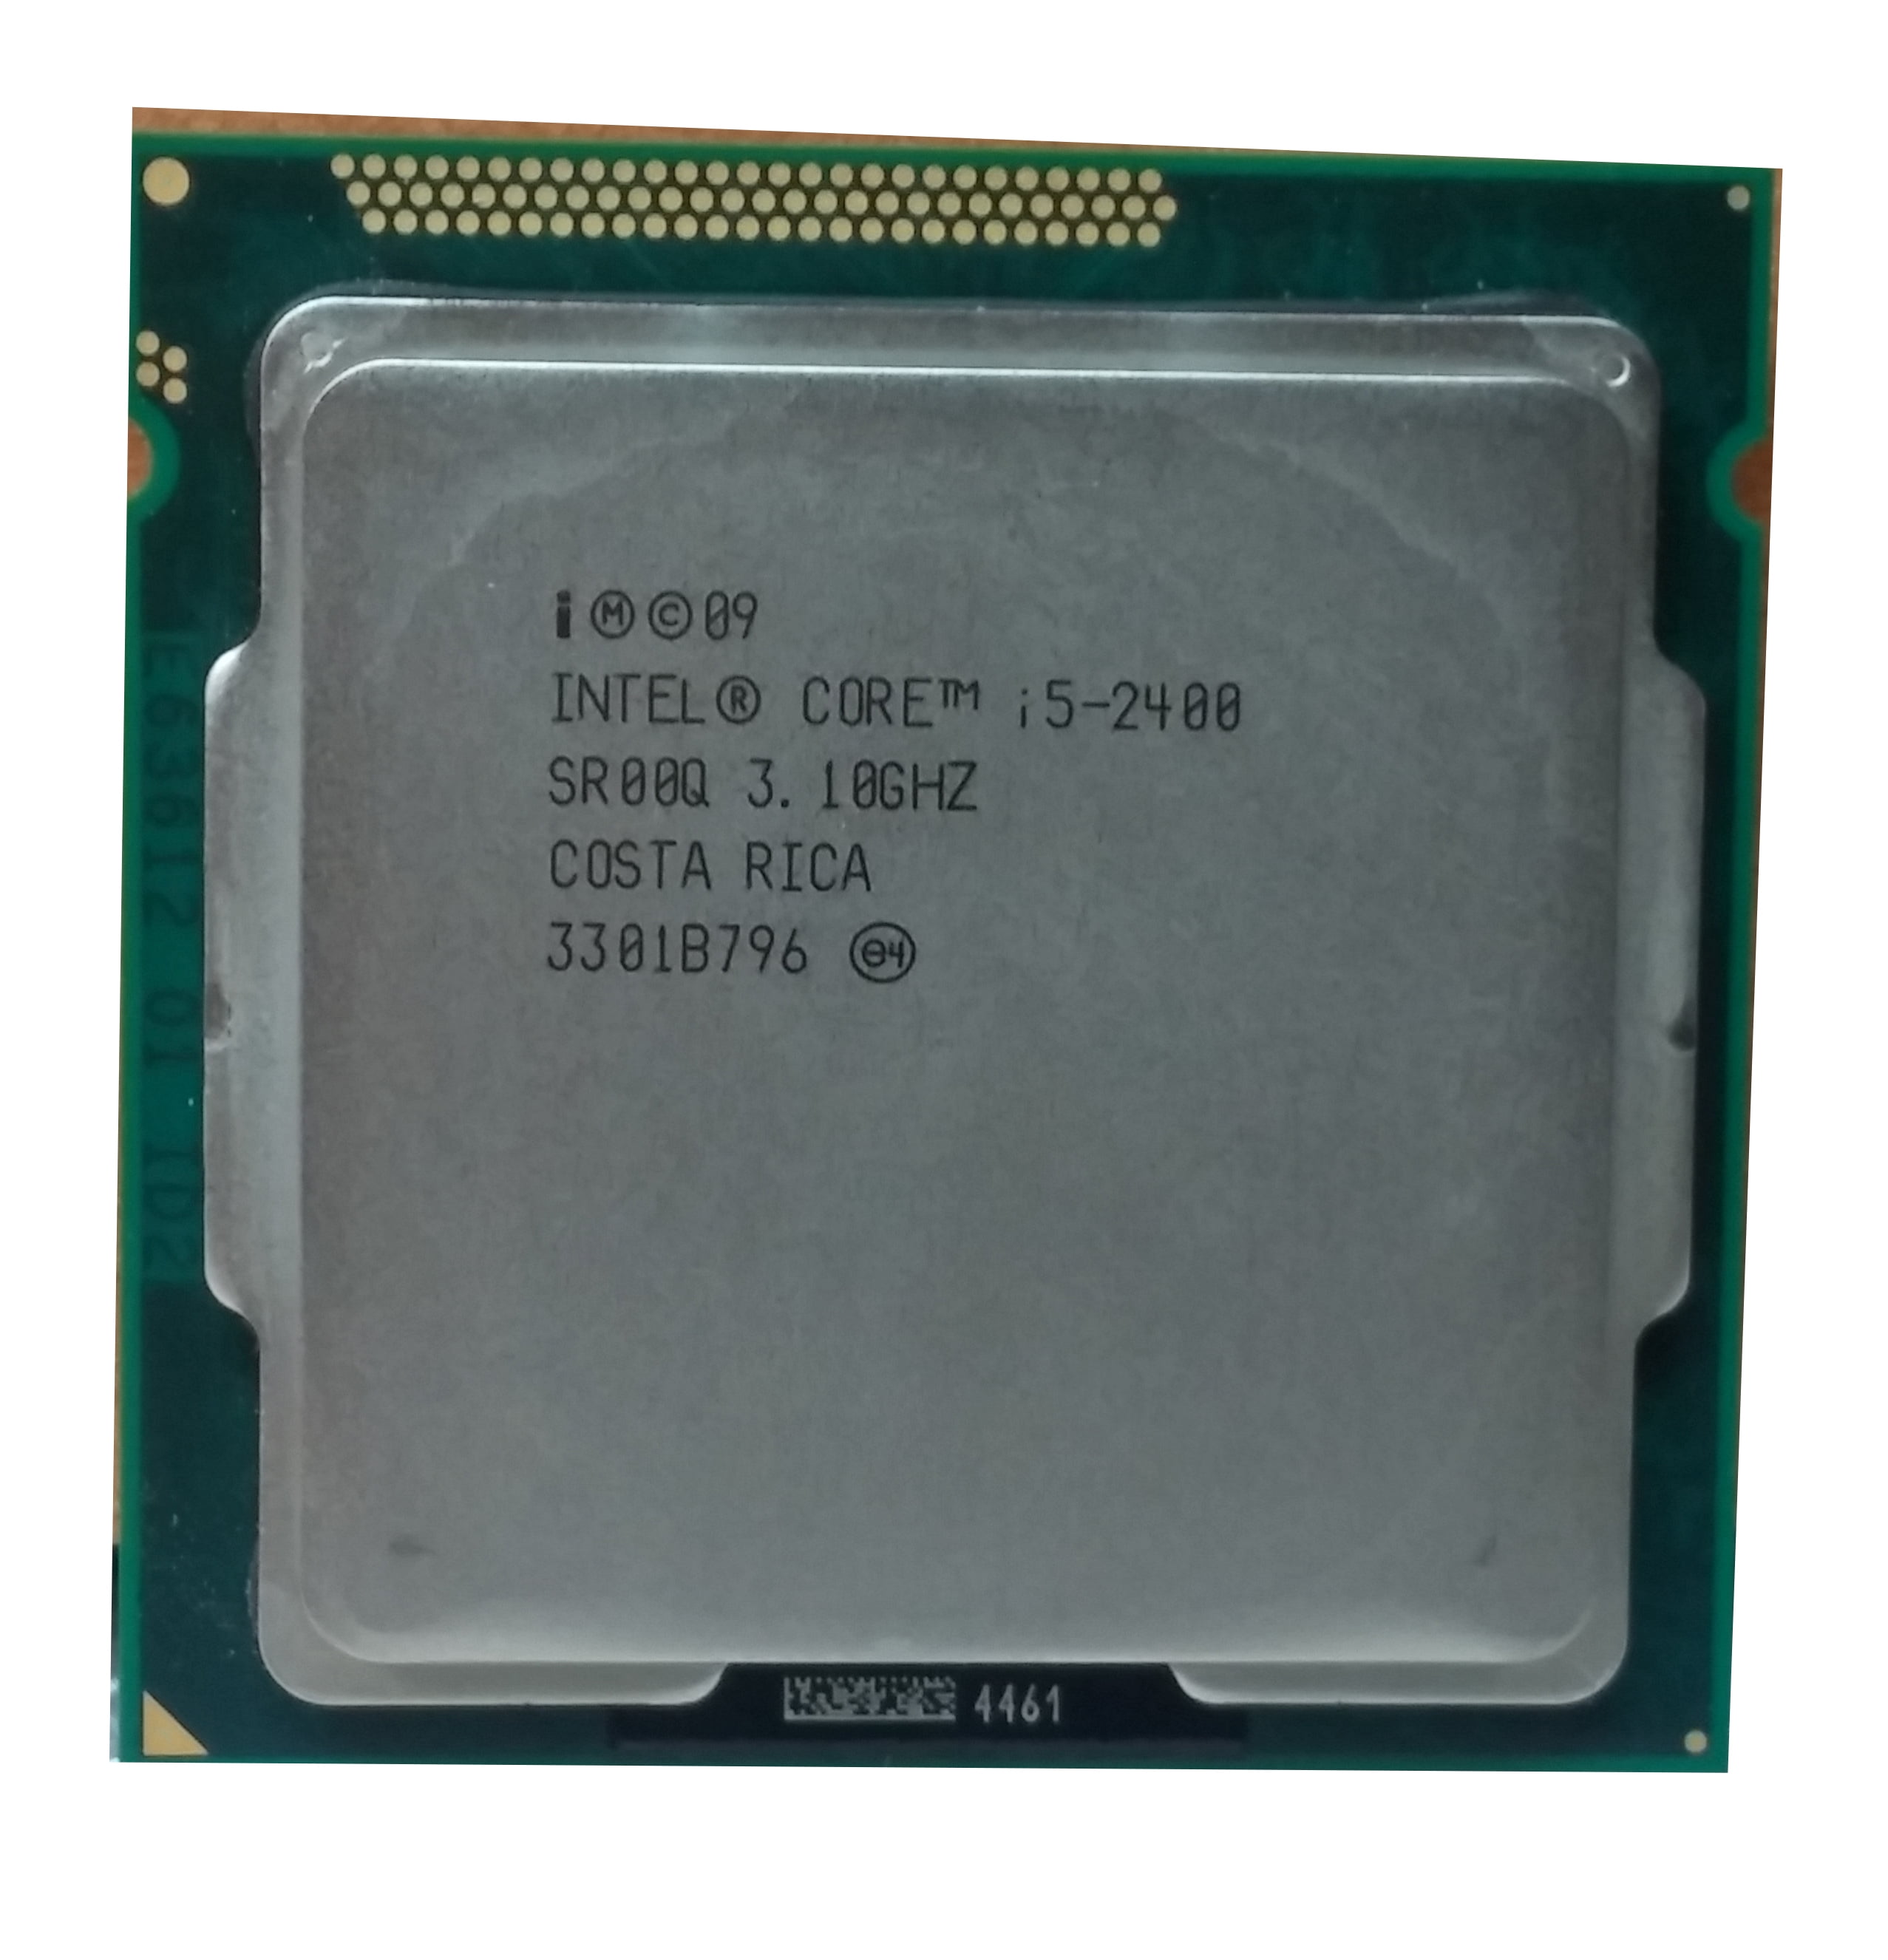 Core i3 3.3 ghz. Intel i5-2400 1155 LGA. Процессор Intel Core i5 2400. Intel Core i5 @ 3.10GHZ. Процессор i5 2400 LGA 1155.